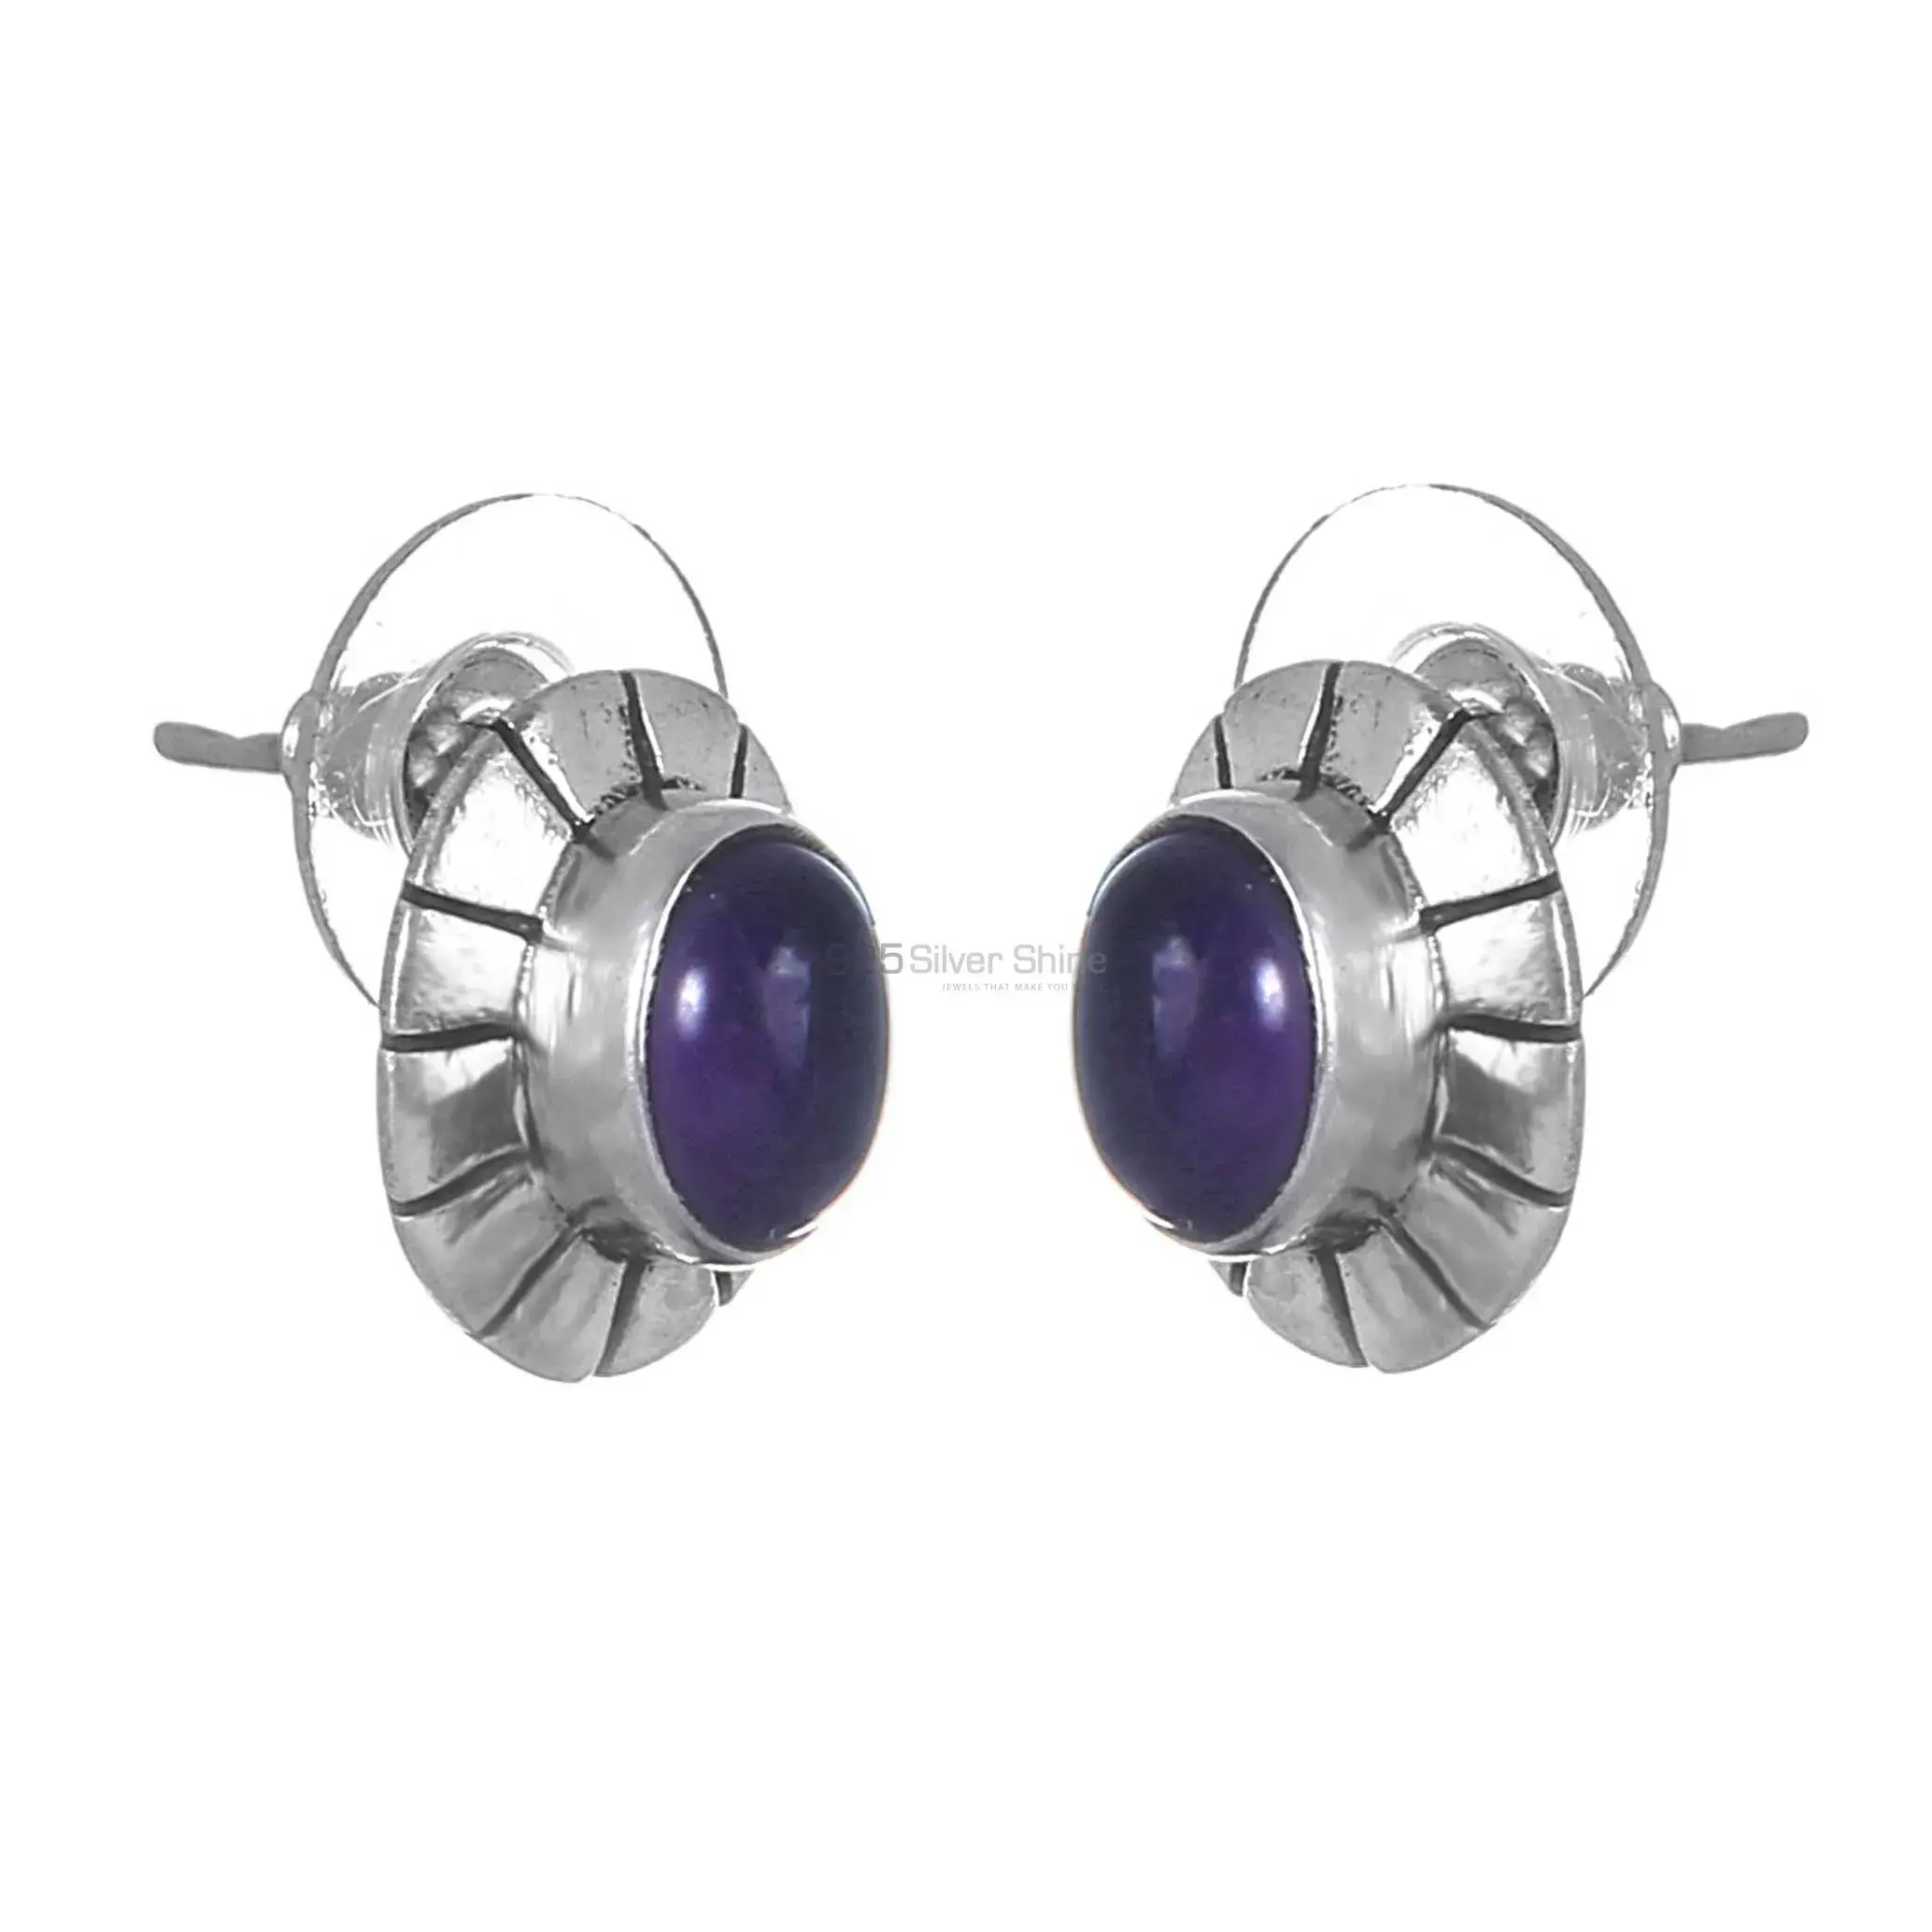 Top Quality 925 Sterling Silver Handmade Earrings In Amethyst Gemstone Jewelry 925SE270_0